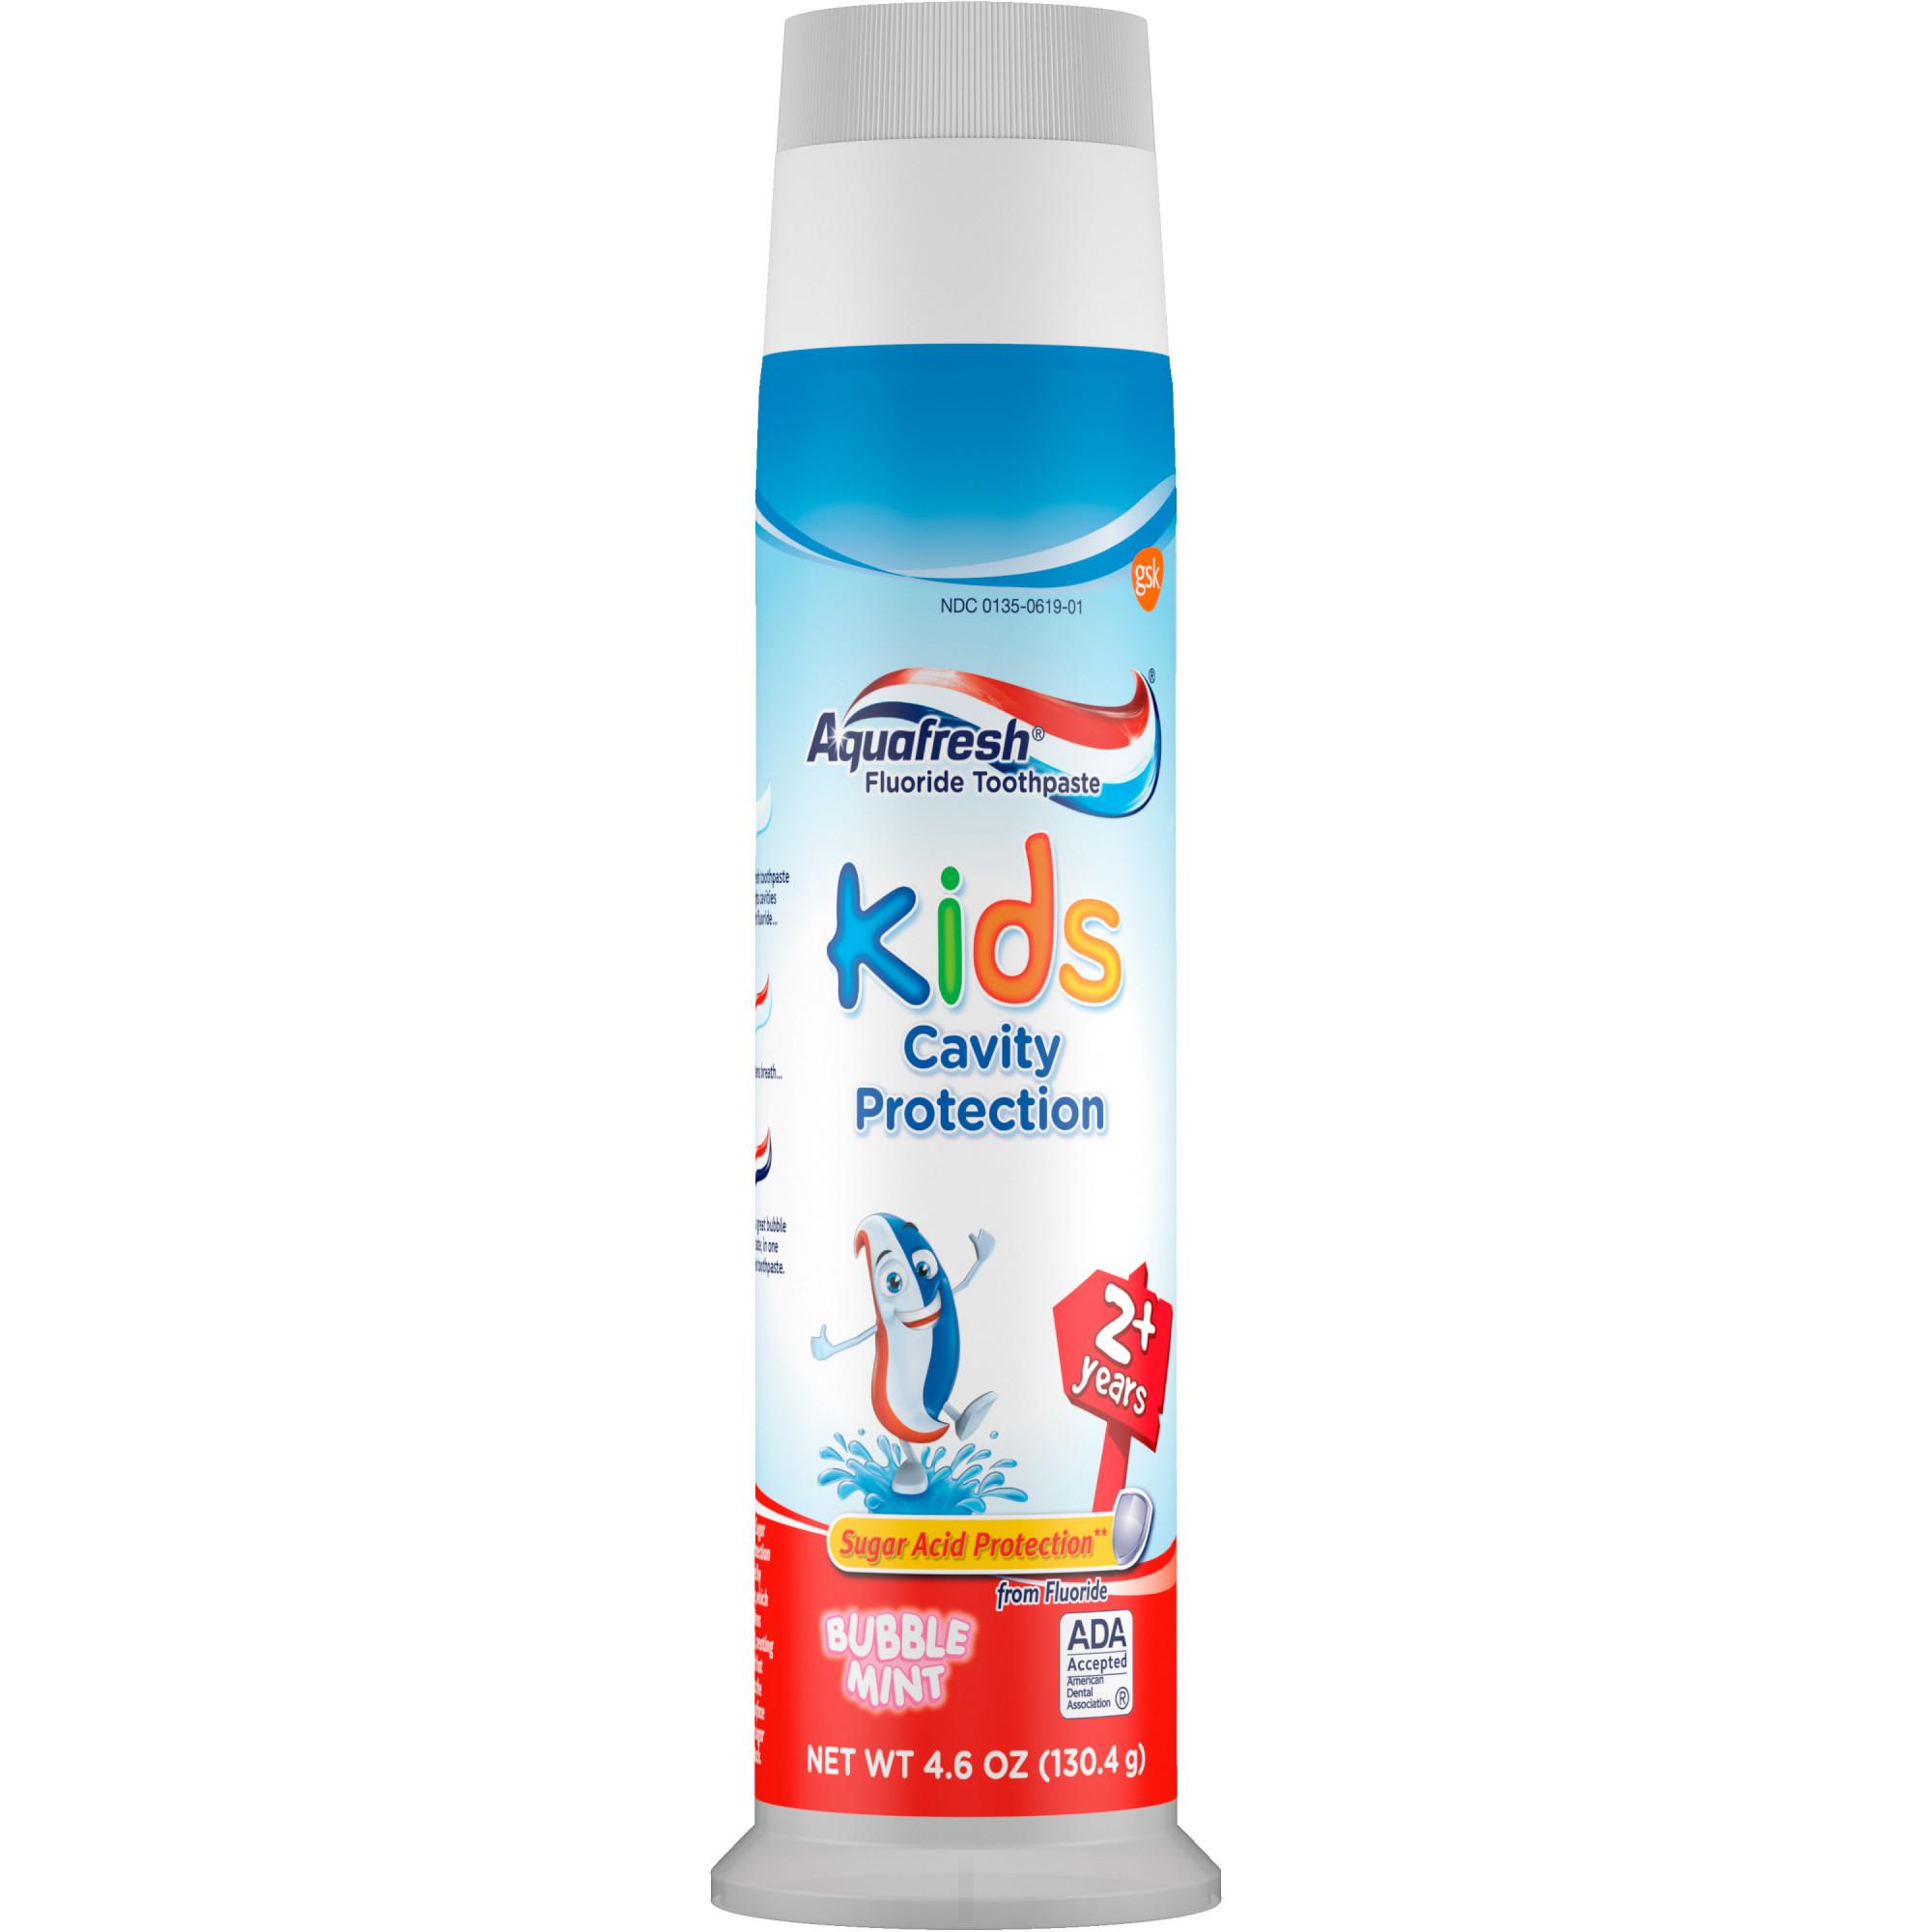 Aquafresh Kids Cavity Protection Fluoride Toothpaste Pump, Bubble Mint, 4.6 Oz - image 1 of 8